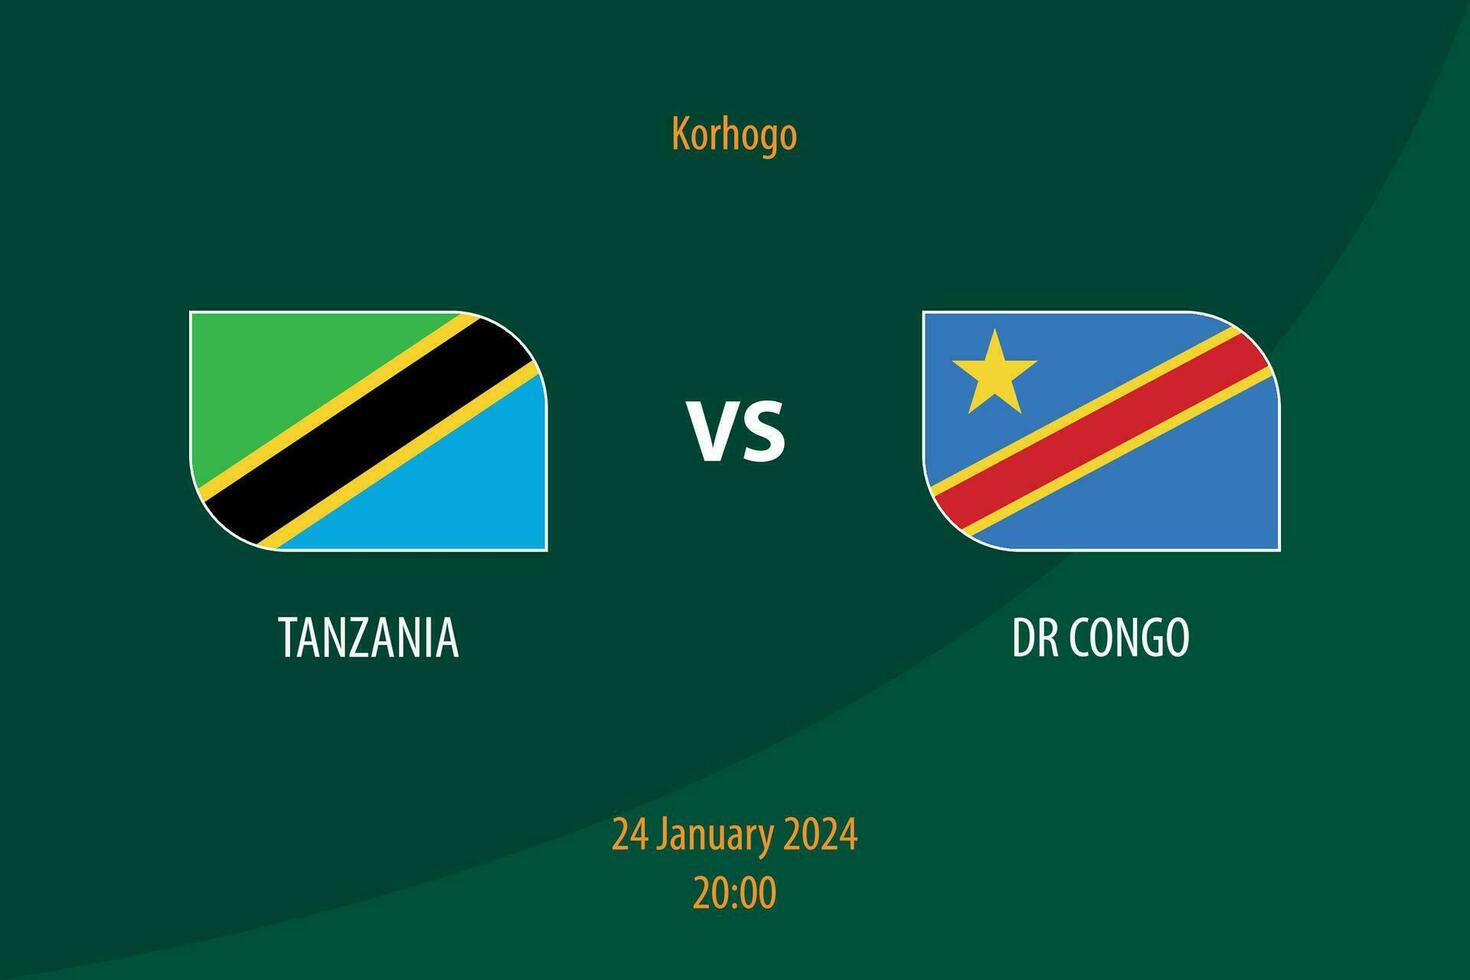 Tanzania vs DR Congo football scoreboard broadcast template vector